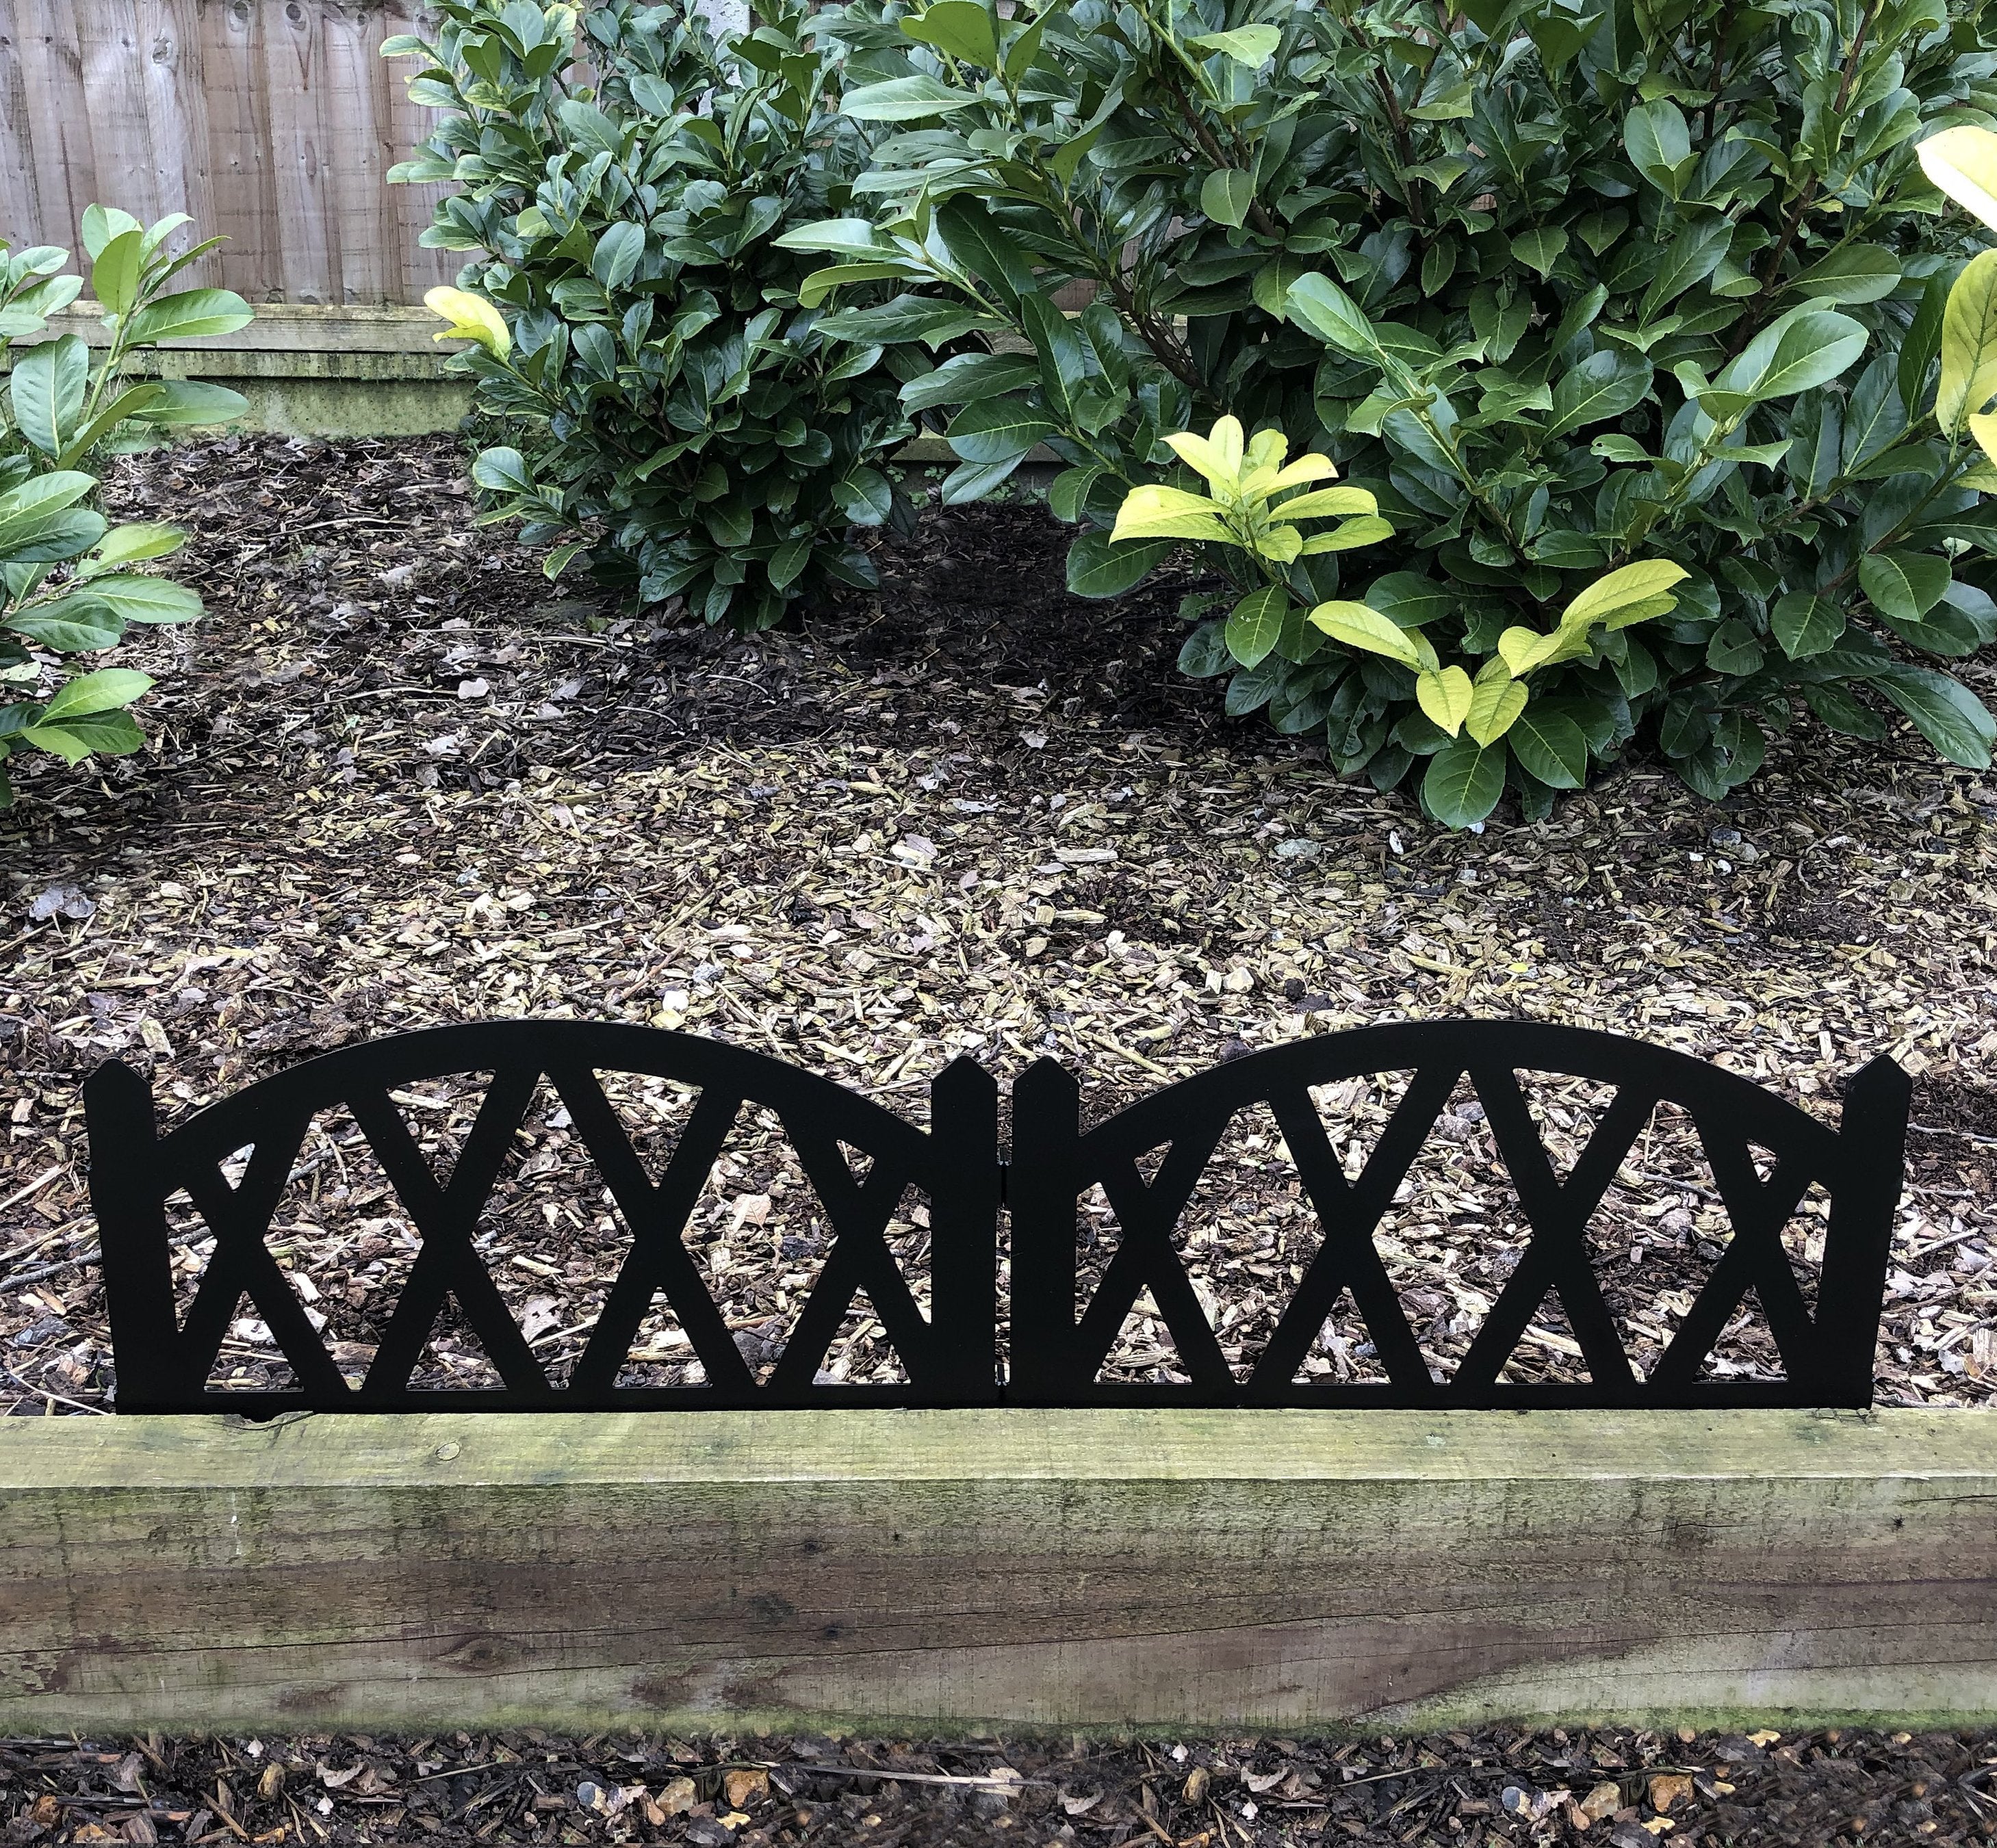 Decorative Classic & Modern Design Garden Picket Fence Panels | Indoor Outdoors